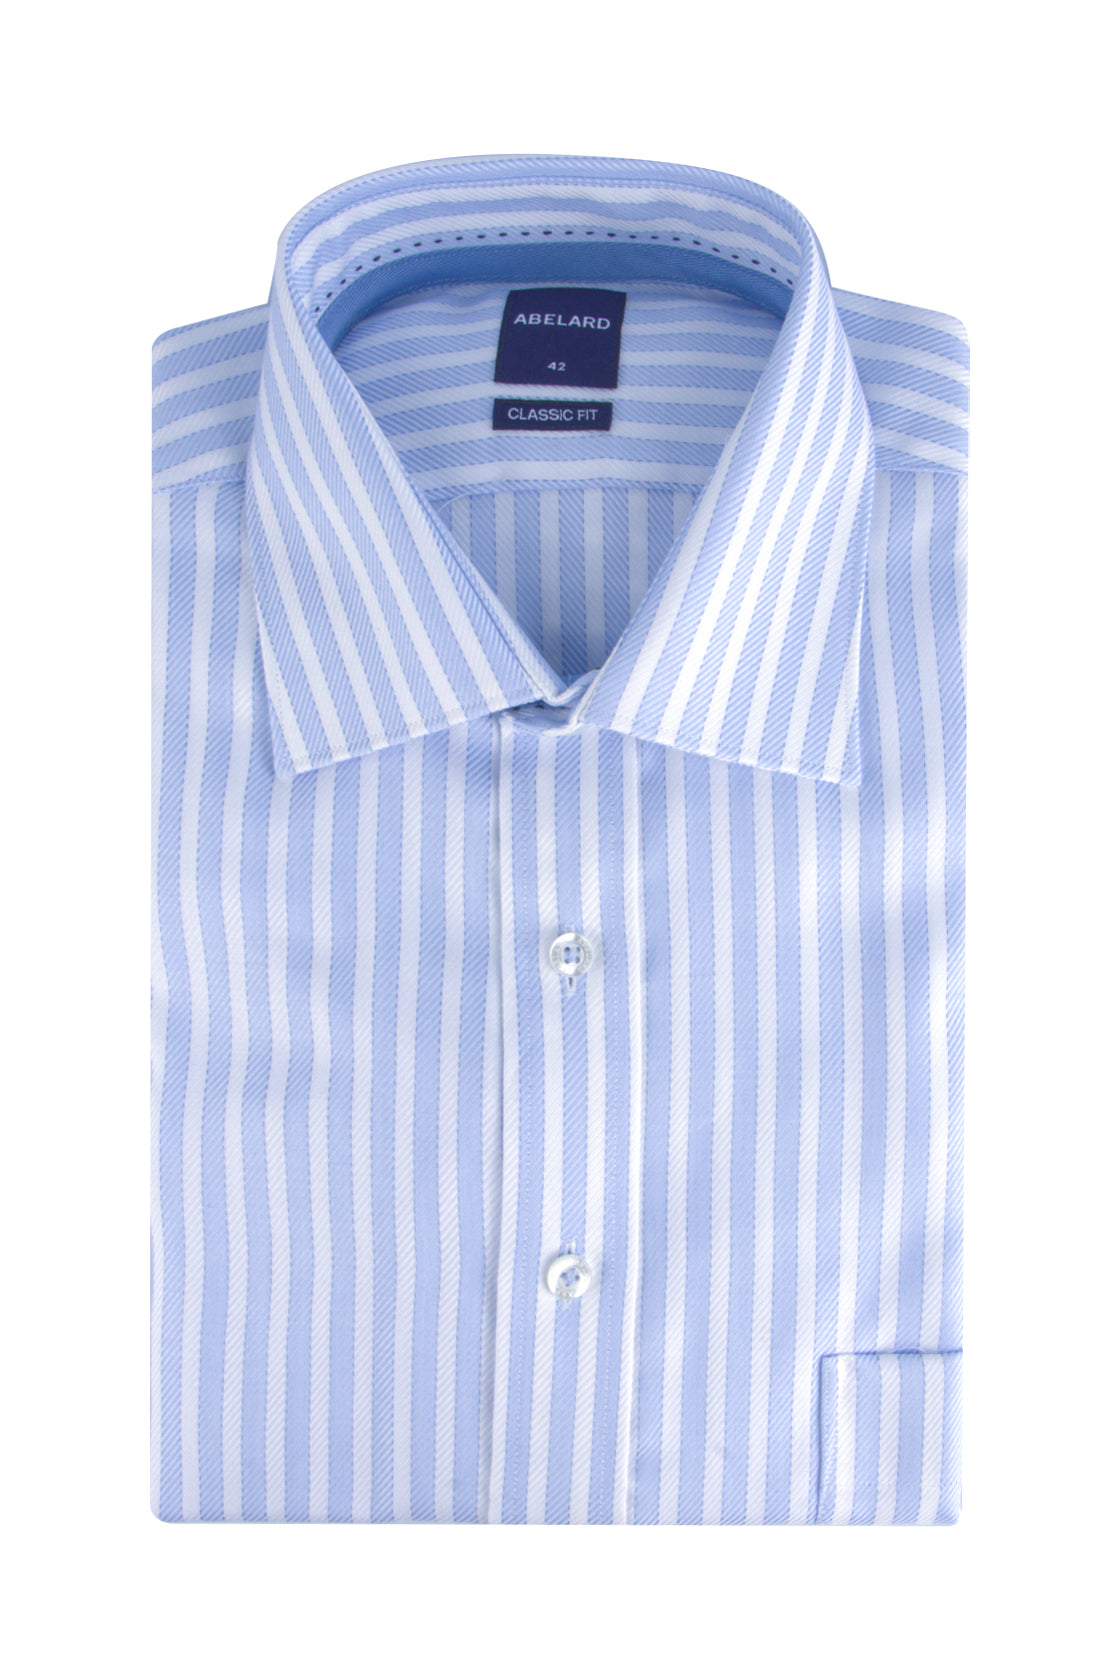 Abelard Banker Twill Stripe Classic Shirt Sky/White